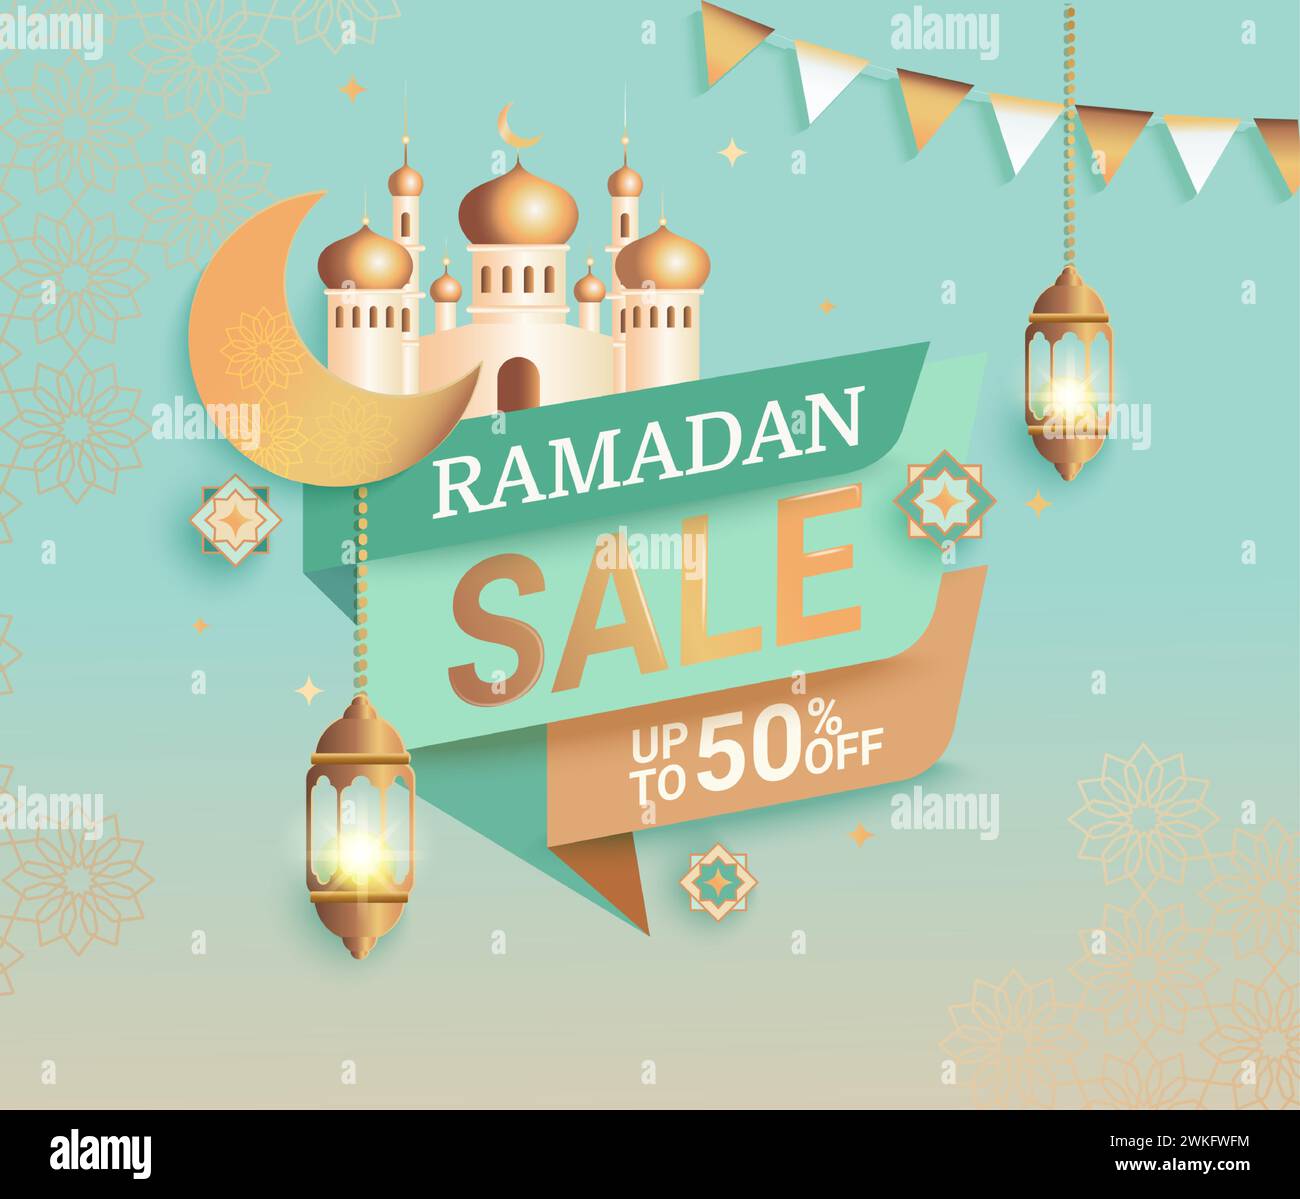 Ramadan sale golden banner. Stock Vector